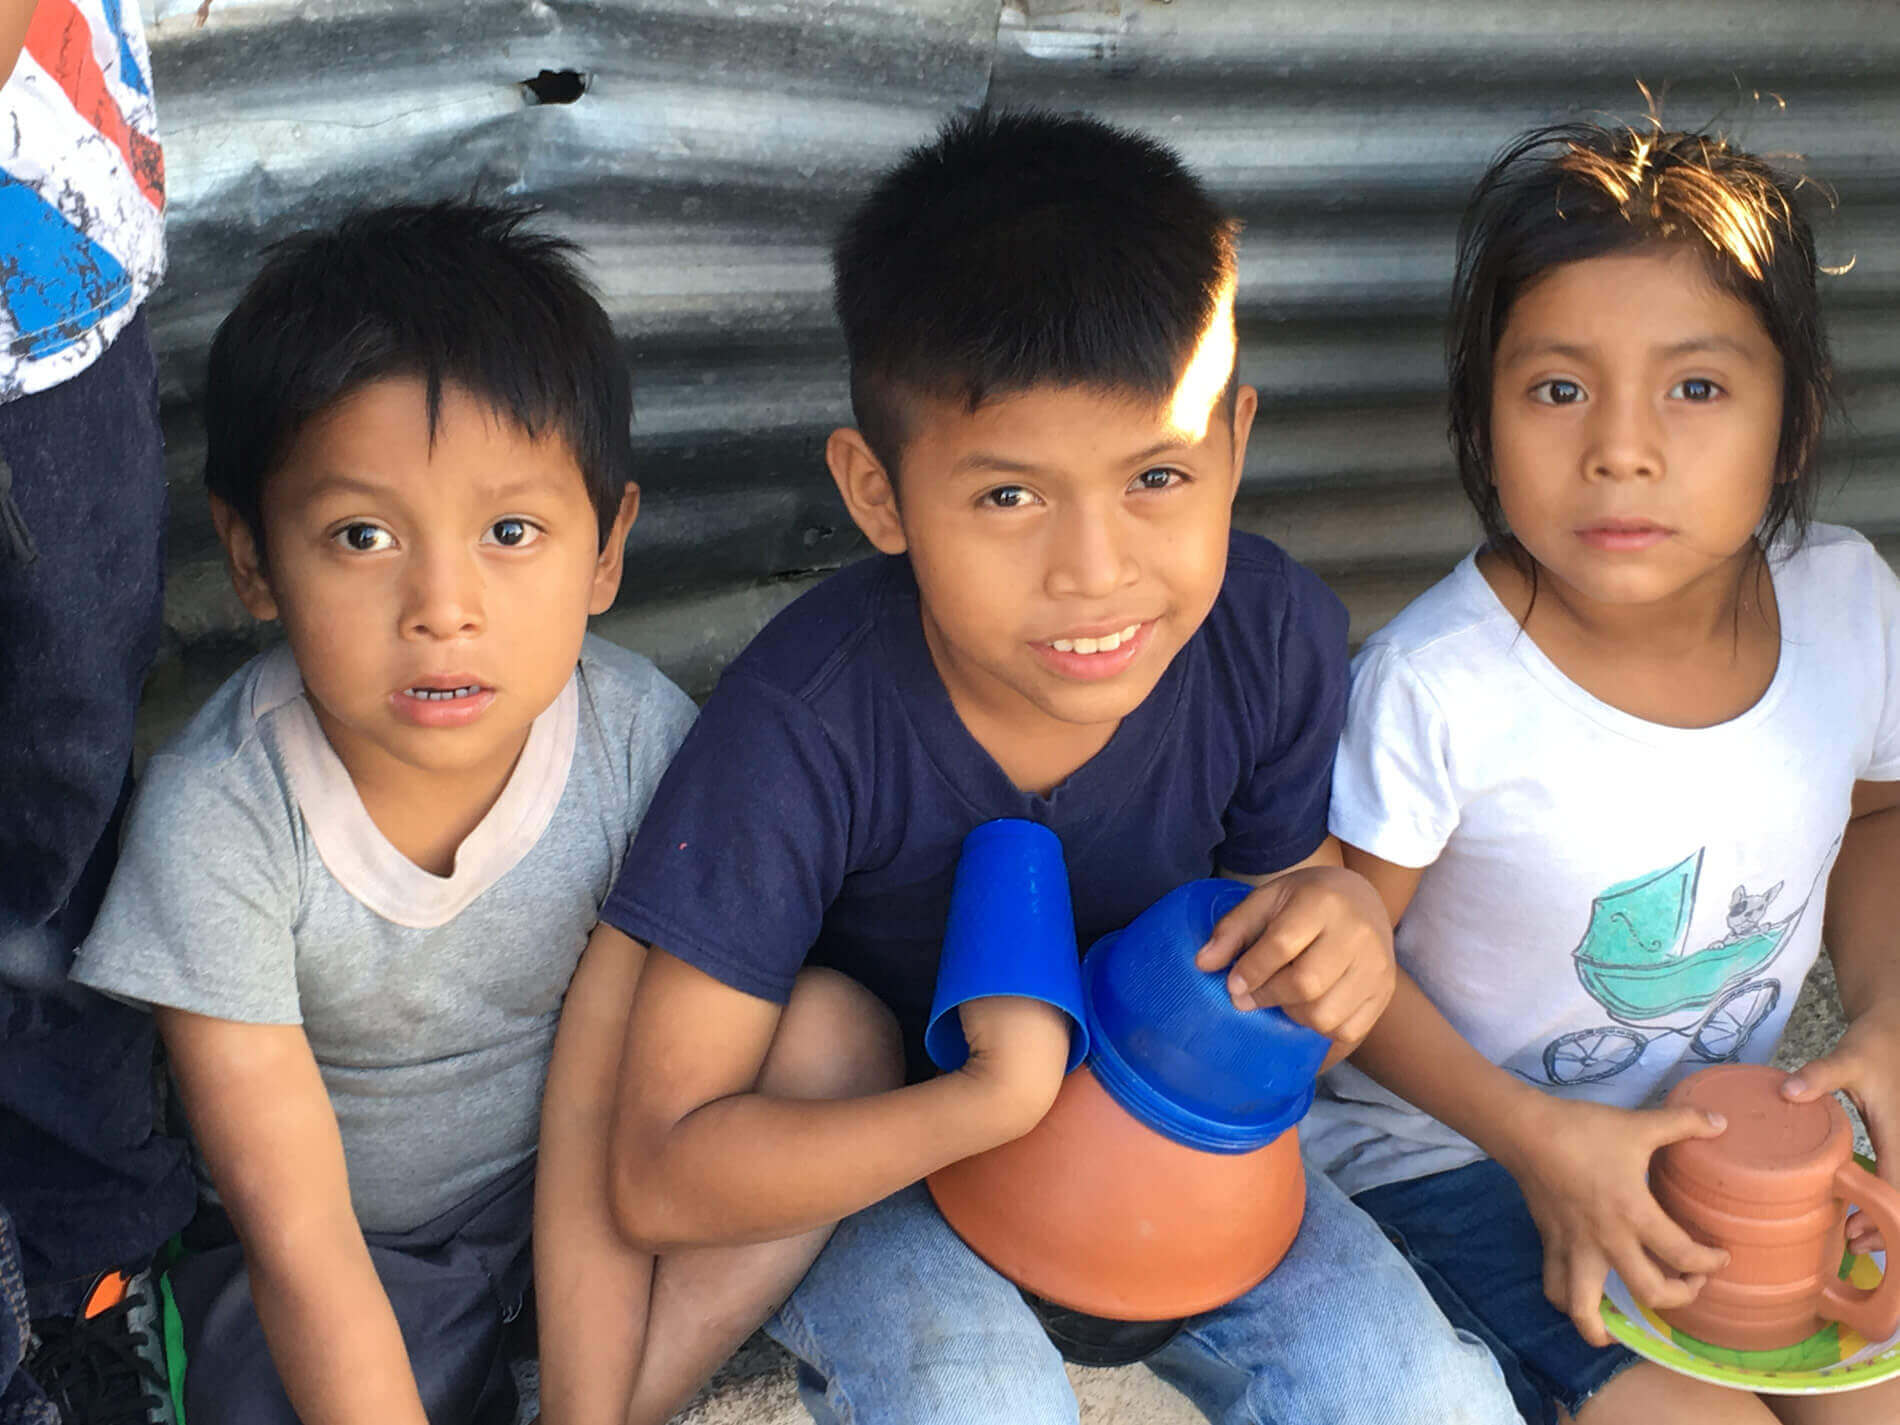 Street children of Latin America